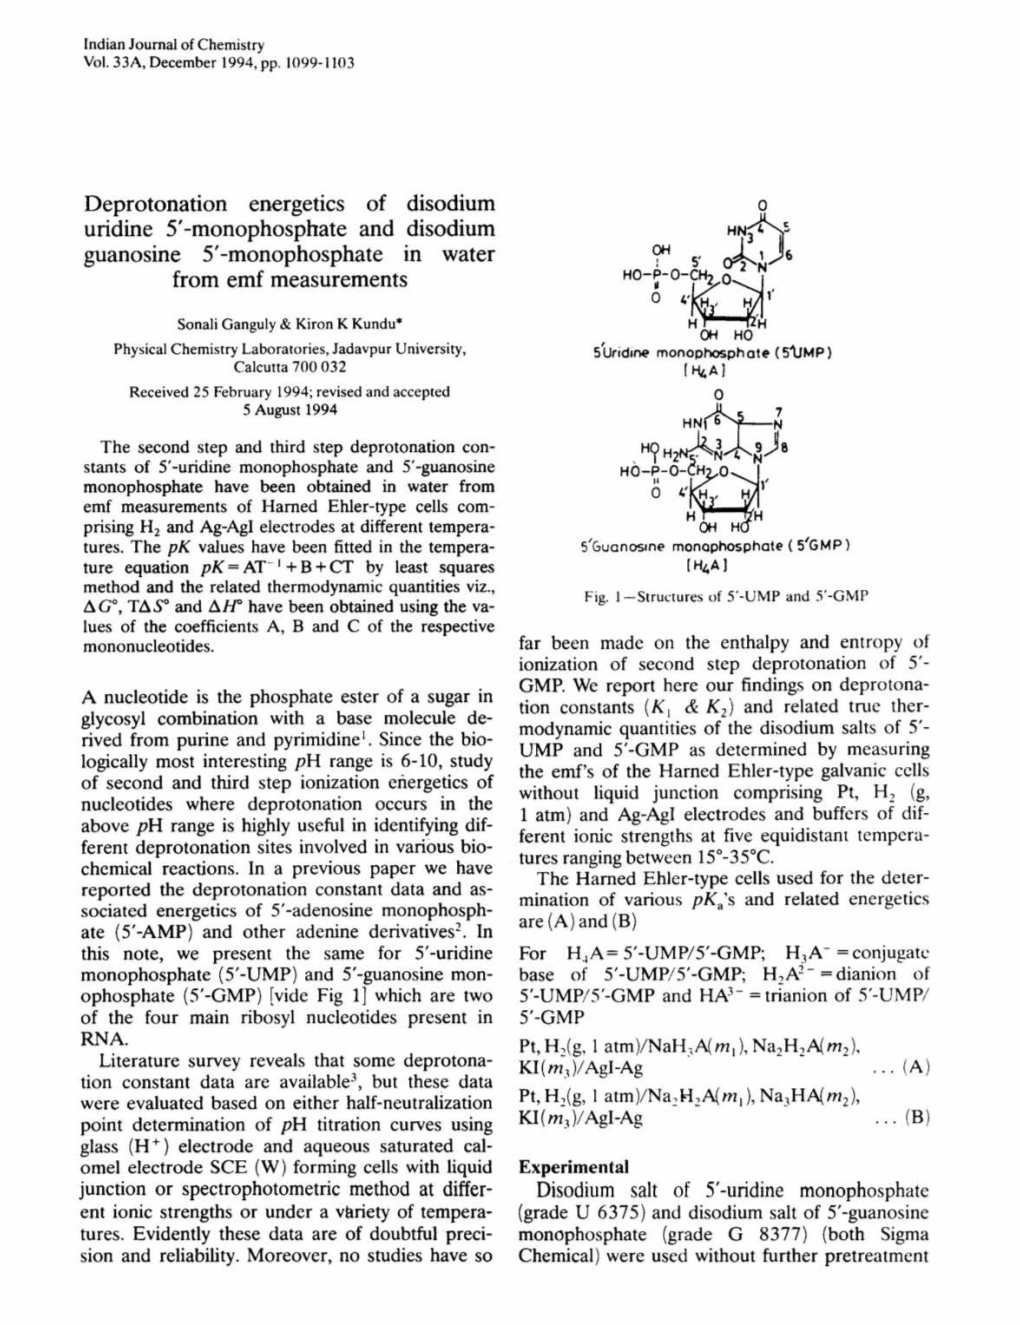 Deprotonation Energetics of Disodium Uridine 5'-Monophosphate and Disodium Guanosine 5'-Monophosphate in Water from Emf Measurem